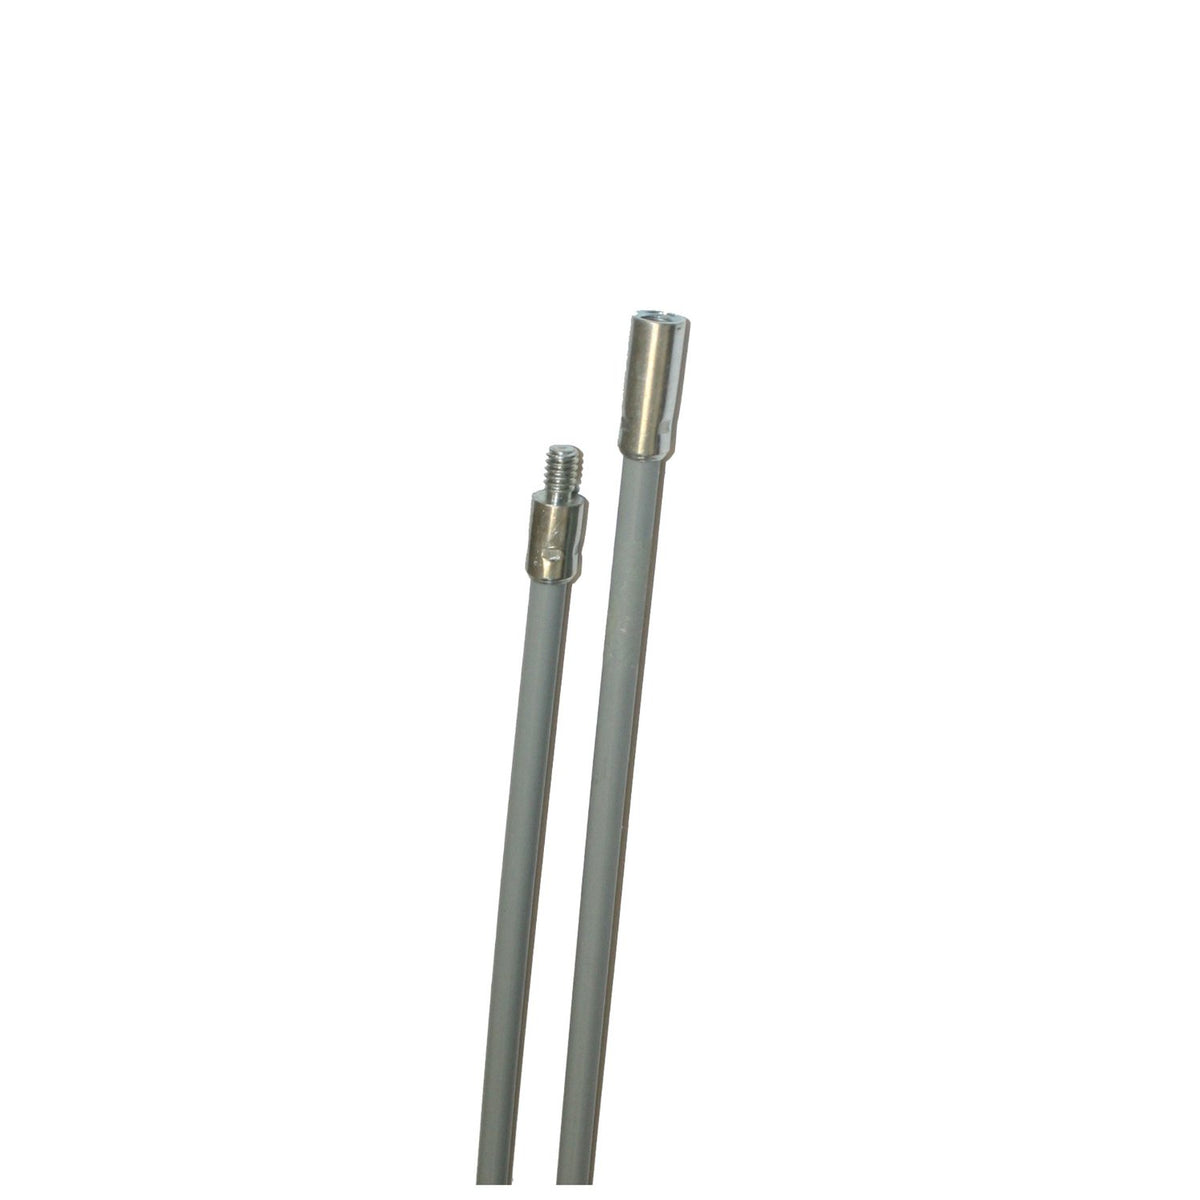 Rutland 25P-5 Flexible Pellet Stove Brush Rod, 1/4-20 Threading, 5' L